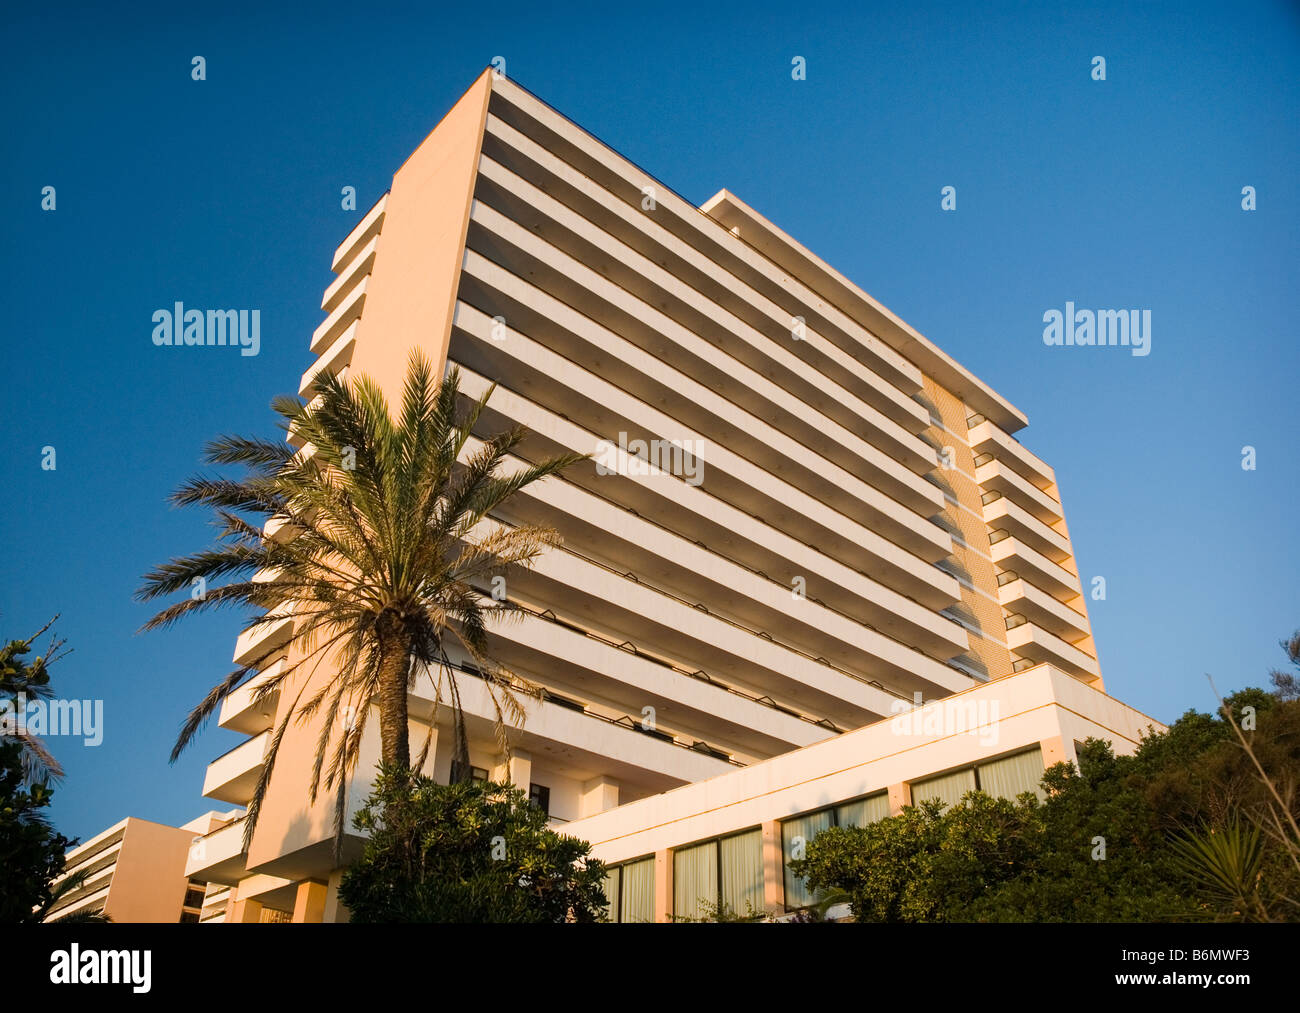 A multi story hotel, Calle de Mallorca Stock Photo